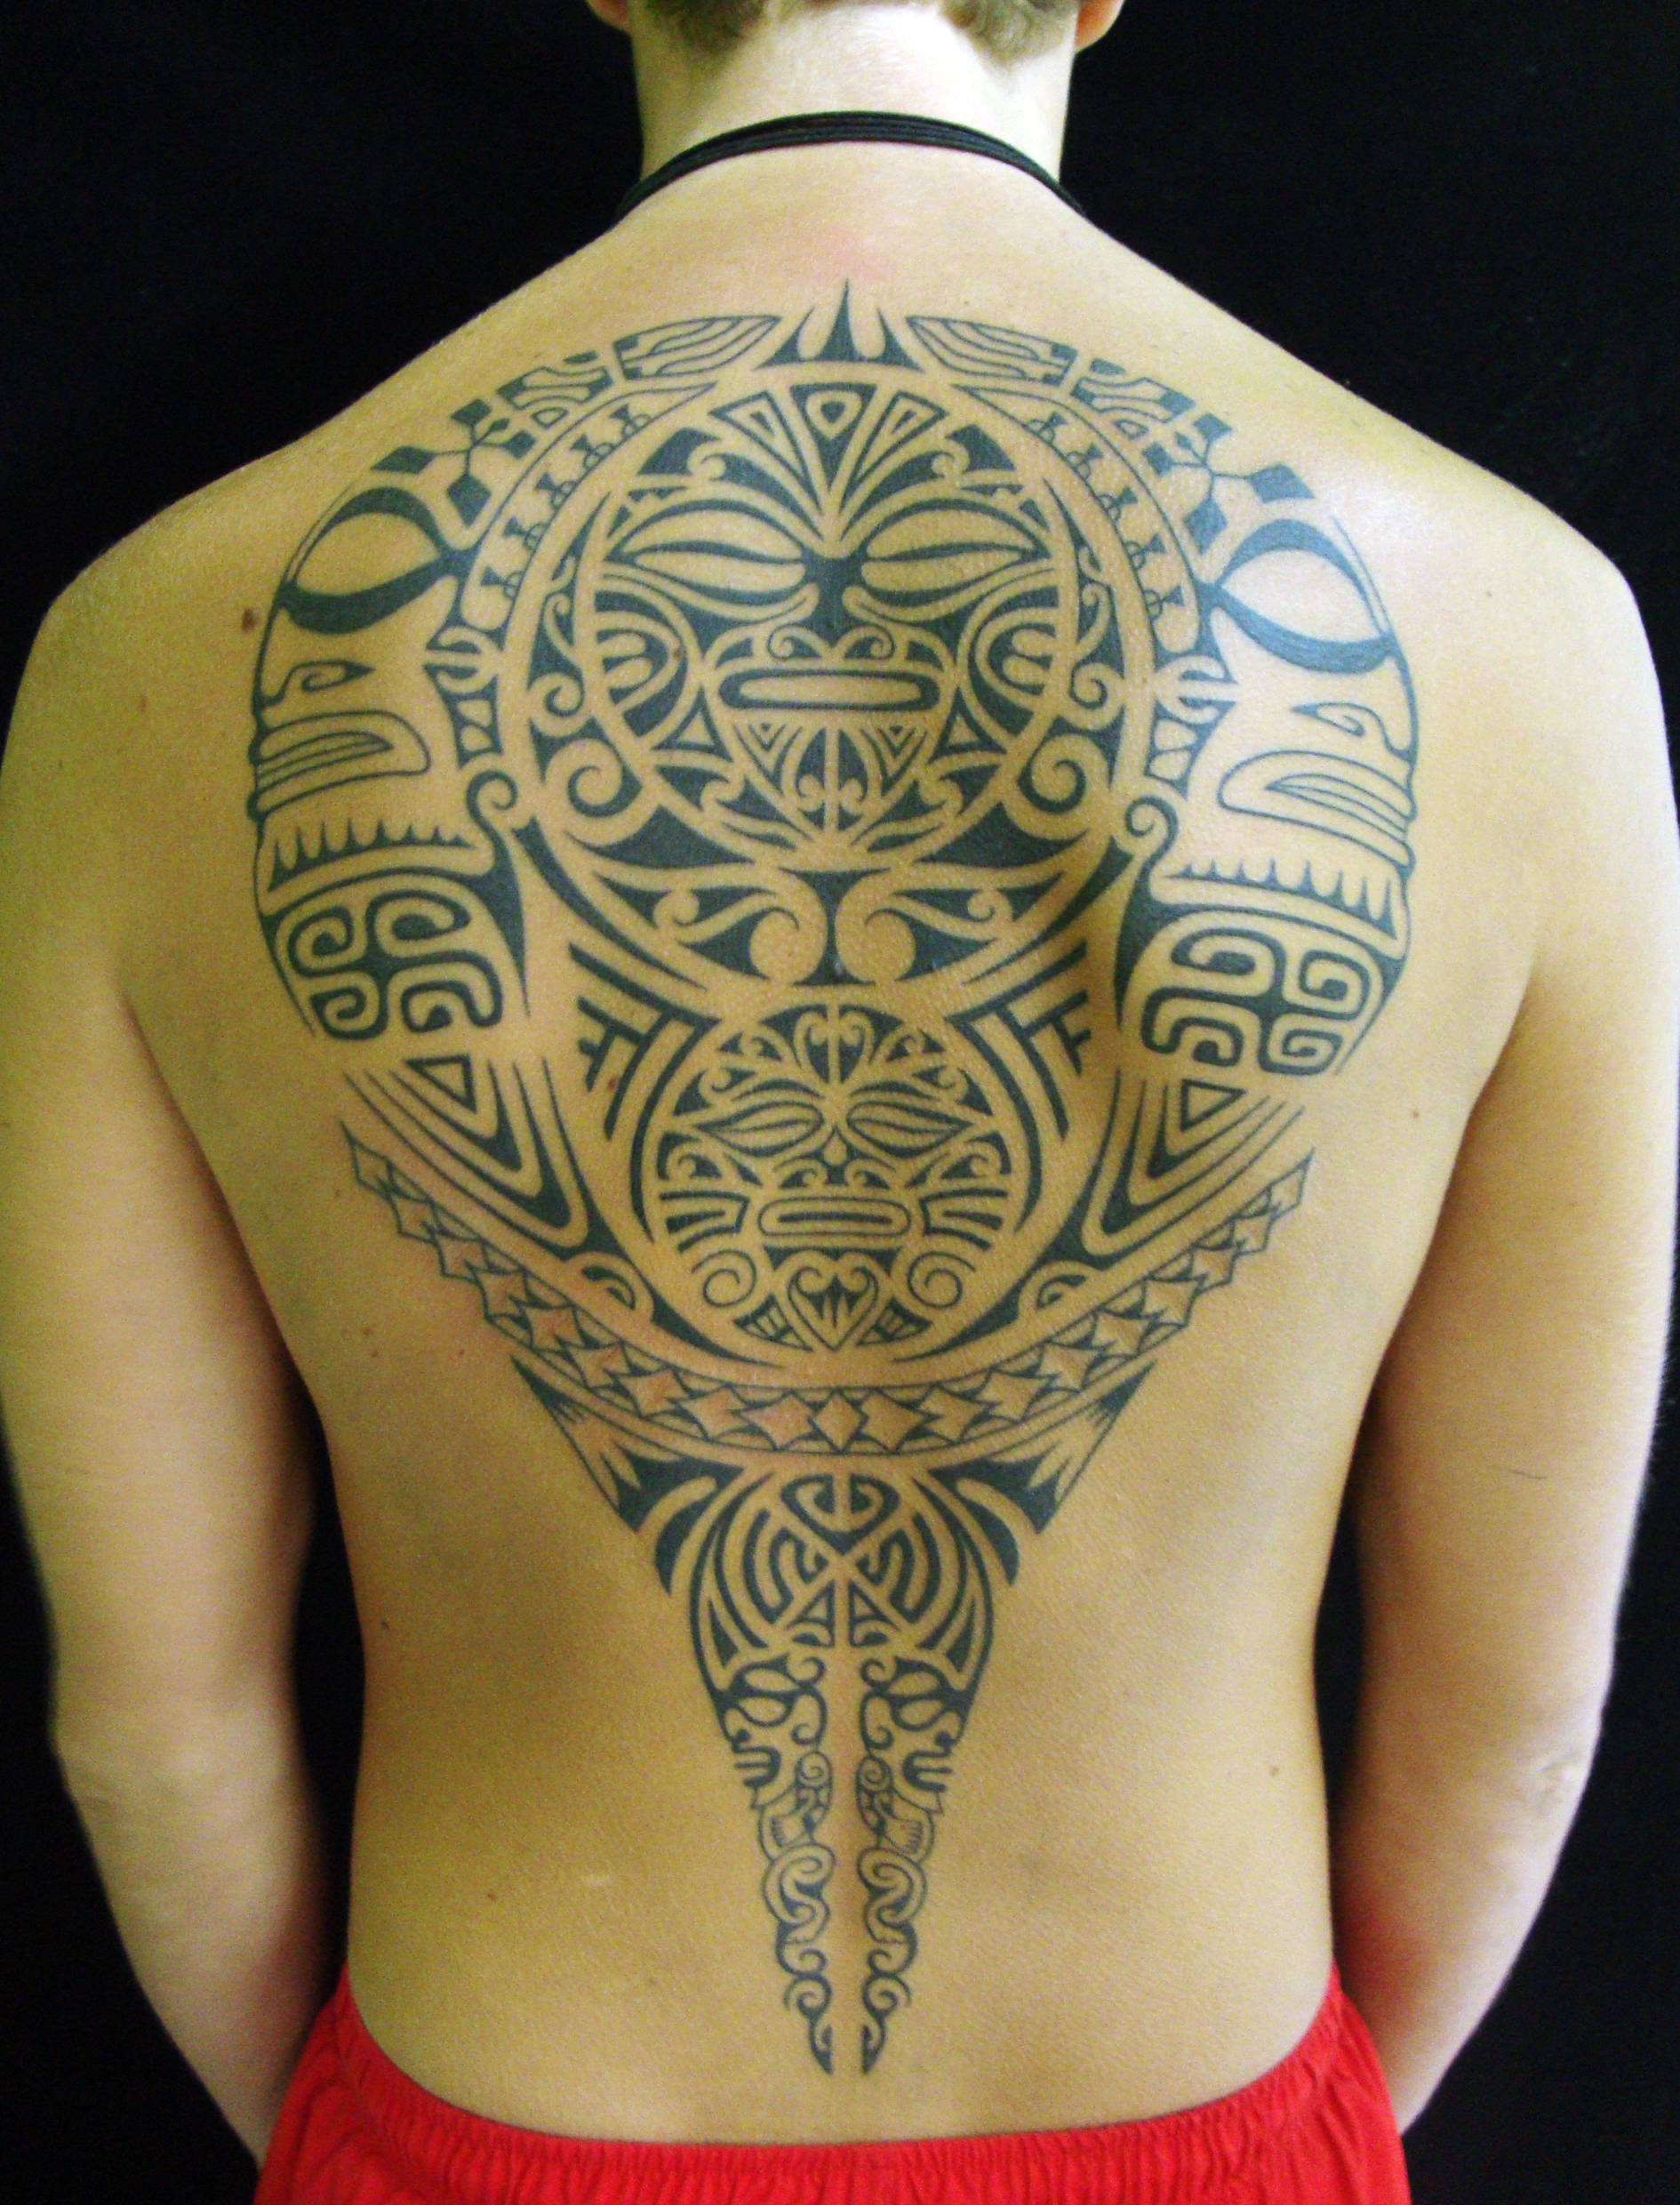 In New Zealand, Moko tattoos experience revival as Māori 'reclaim a sense  of identity'